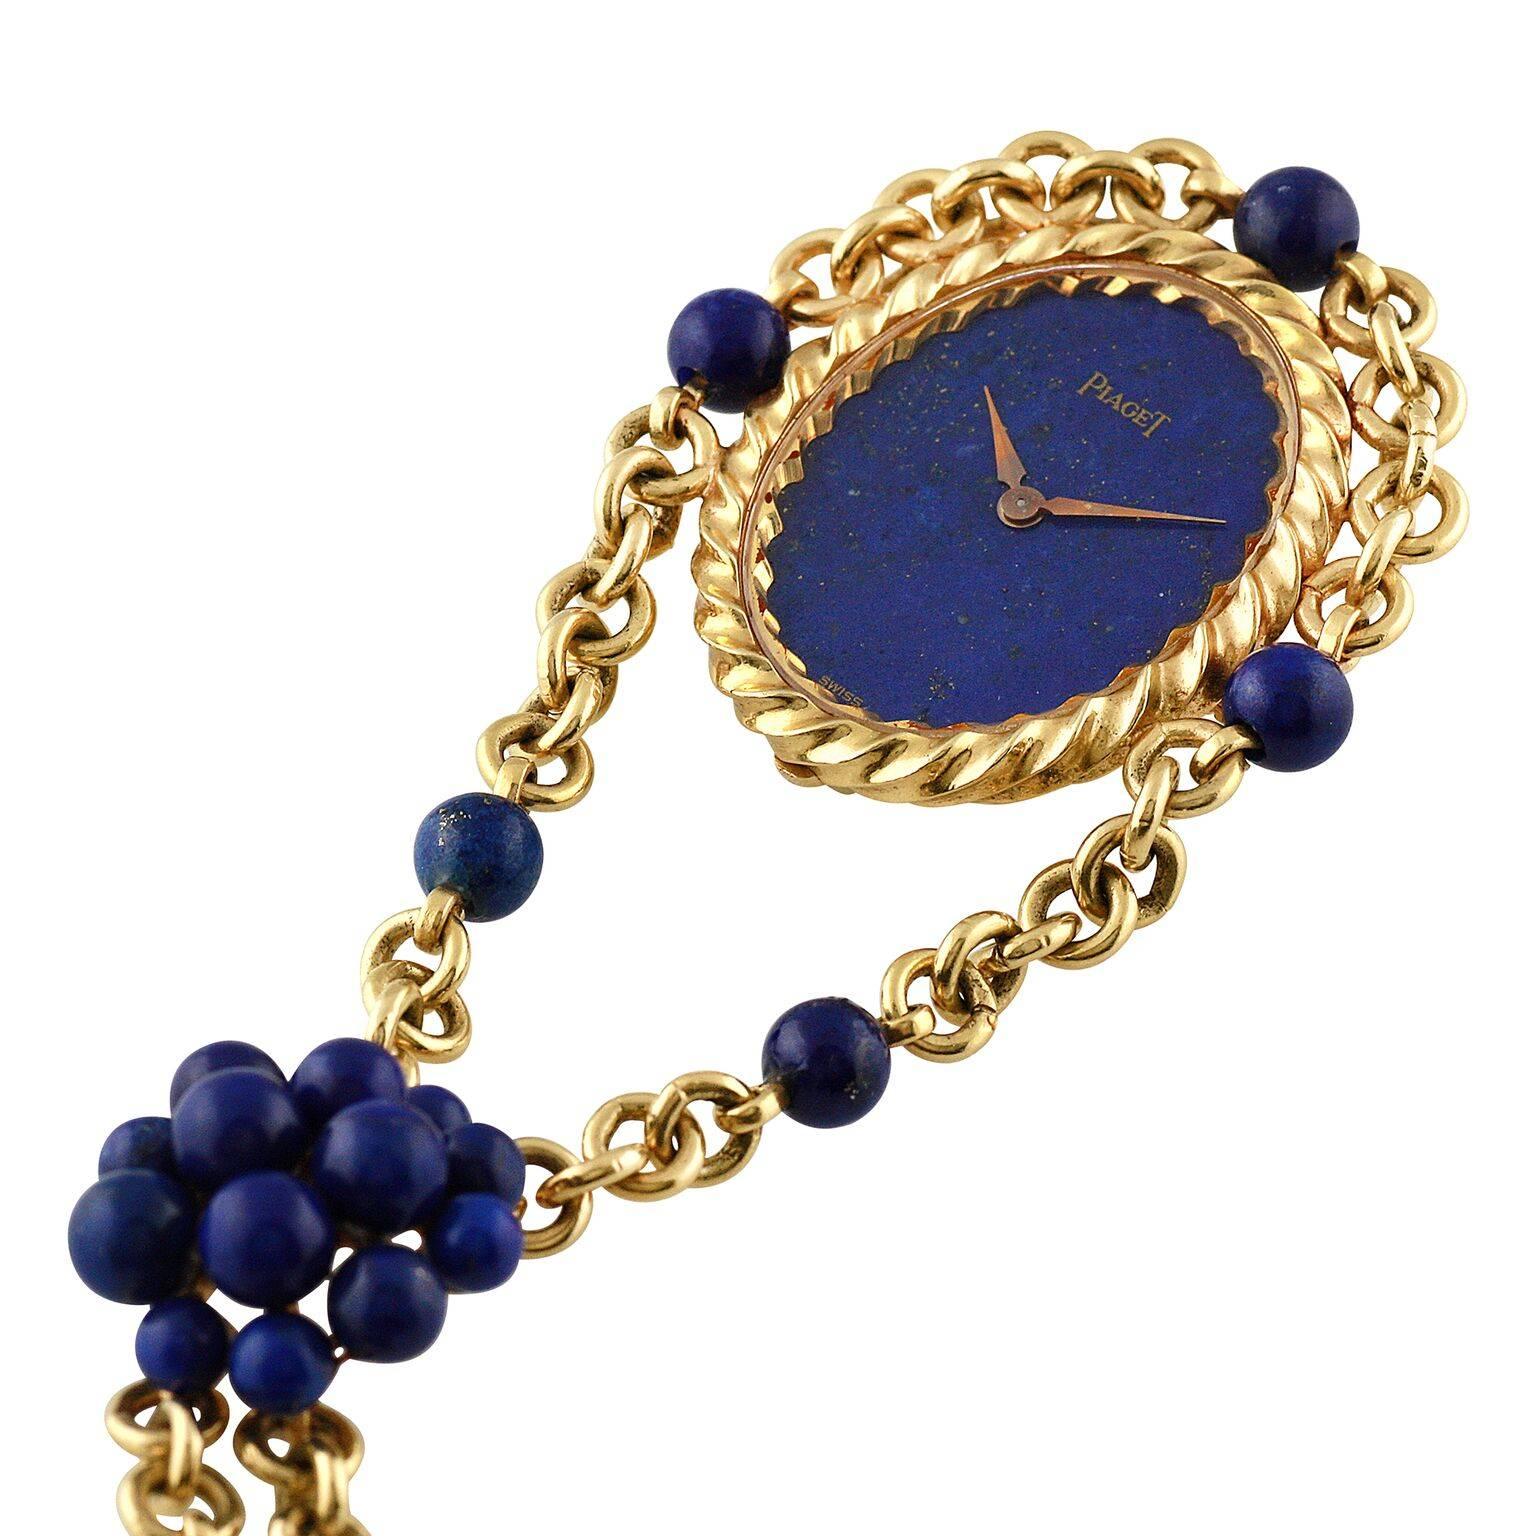 Modern Piaget Lady's Yellow Gold Lapis Lazuli Necklace Watch